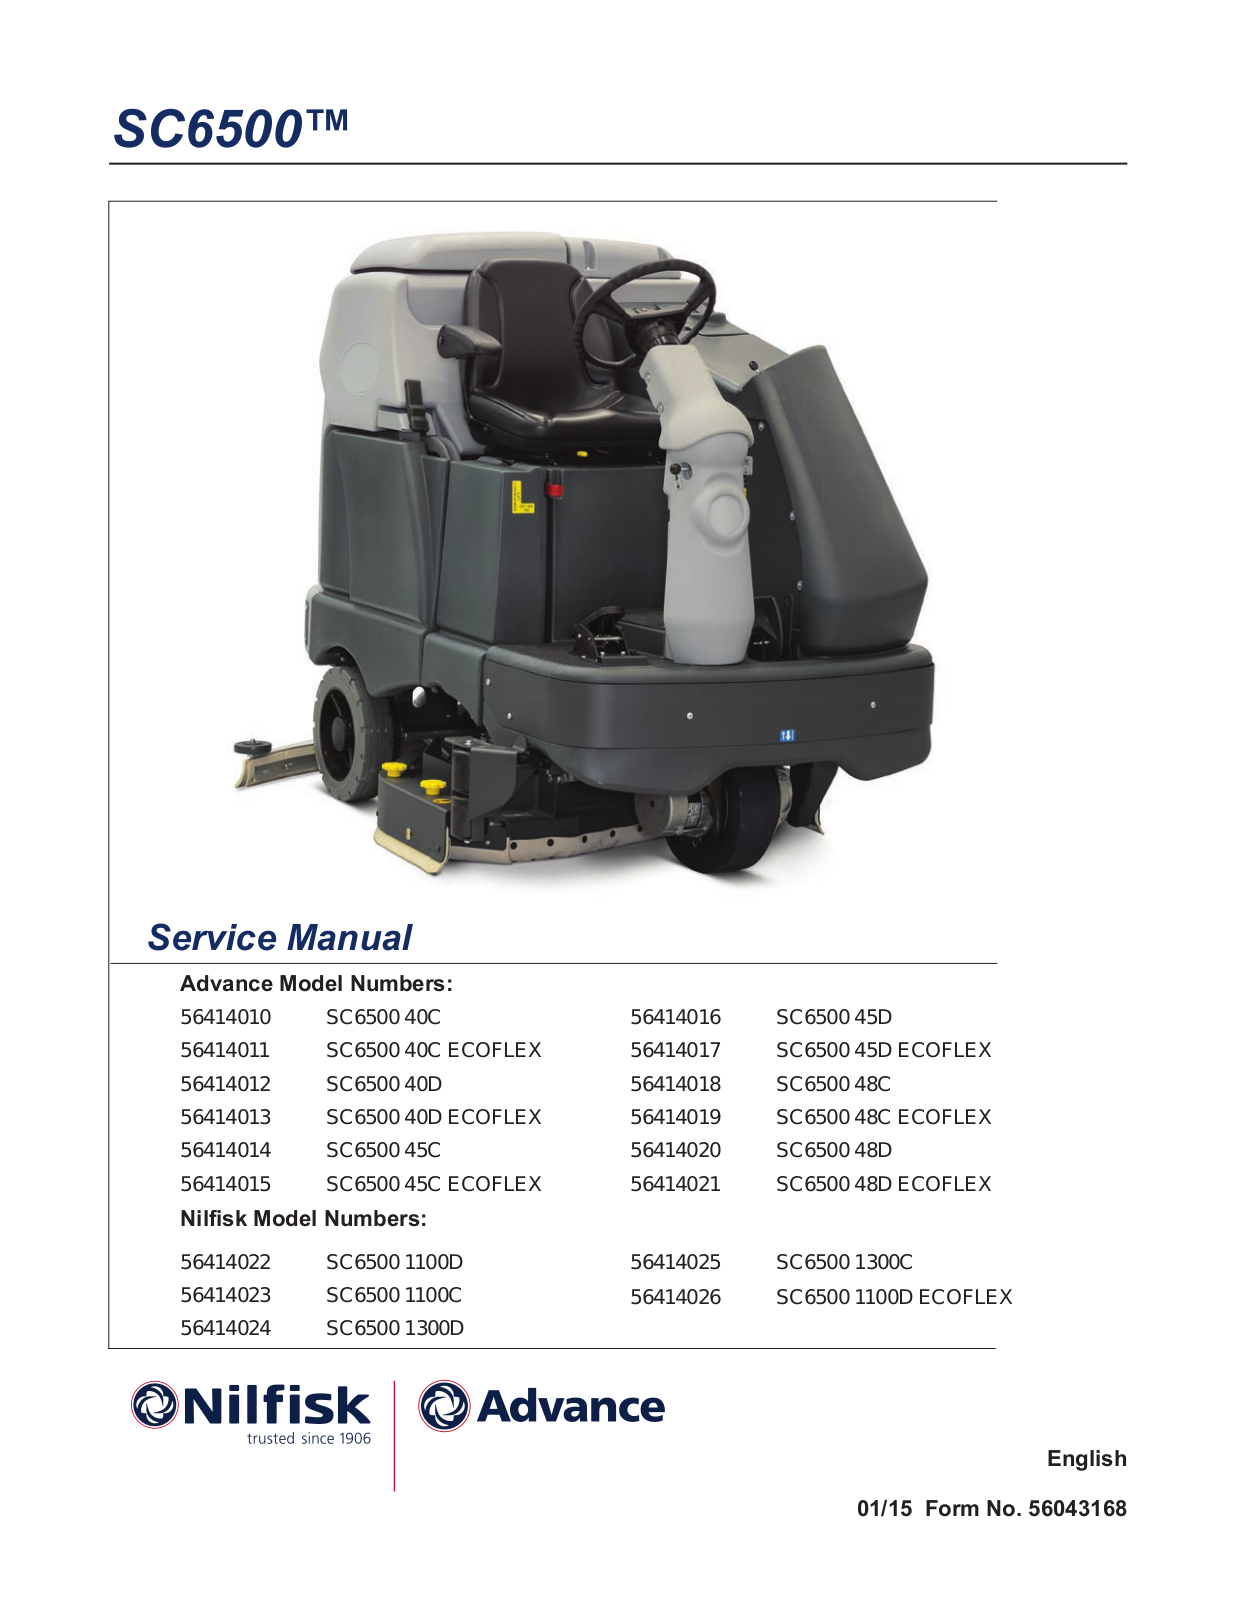 NILFISK SC6500 1100C Service Manual